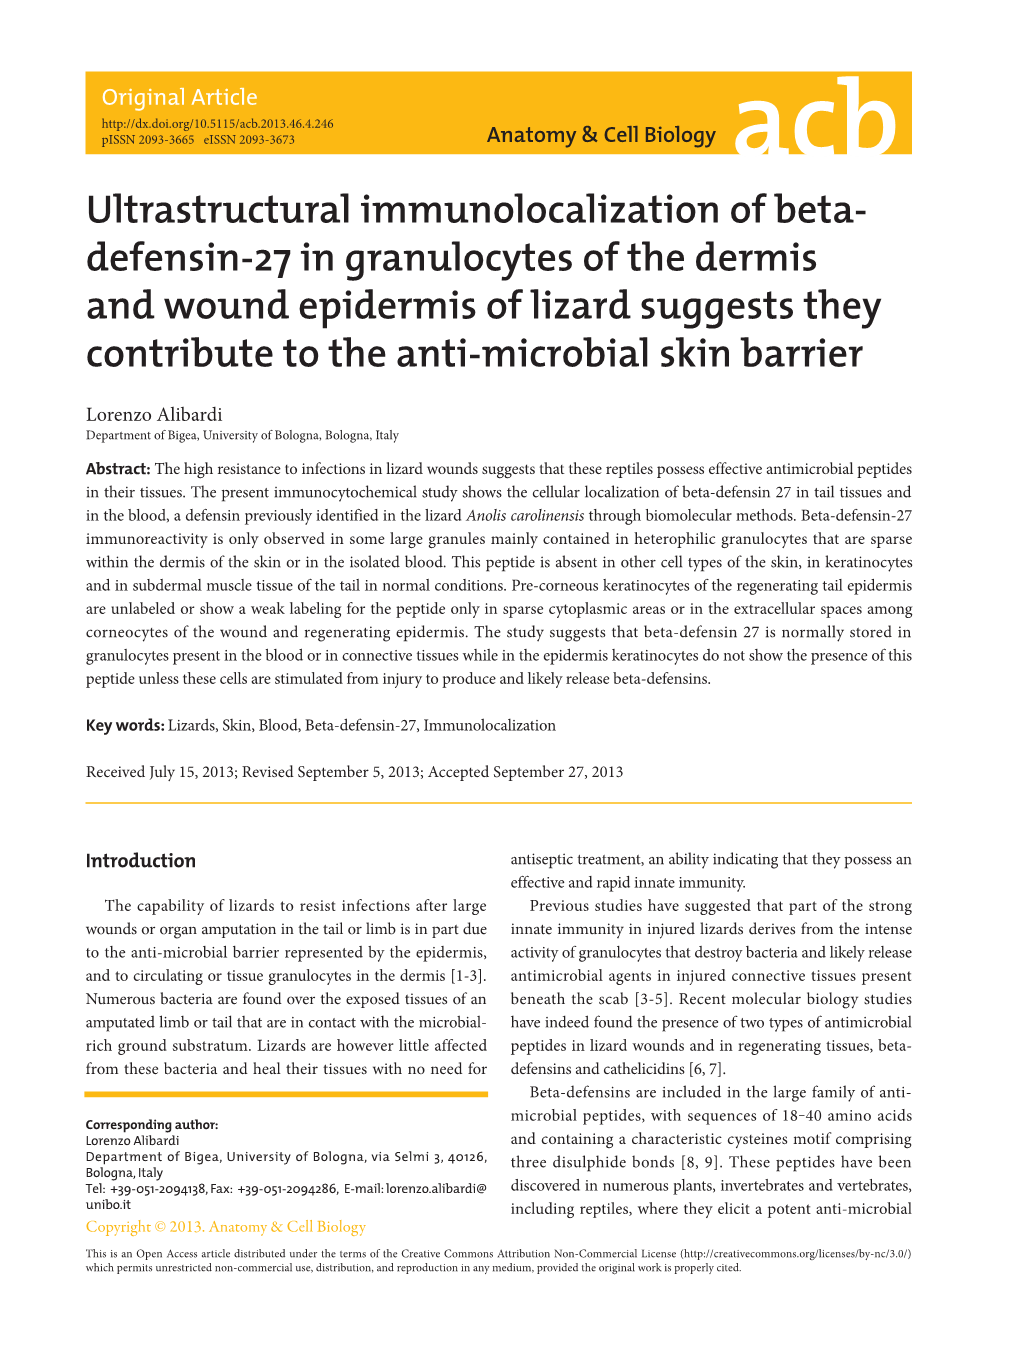 Ultrastructural Immunolocalization of Beta- Defensin-27 in Granulocytes Of